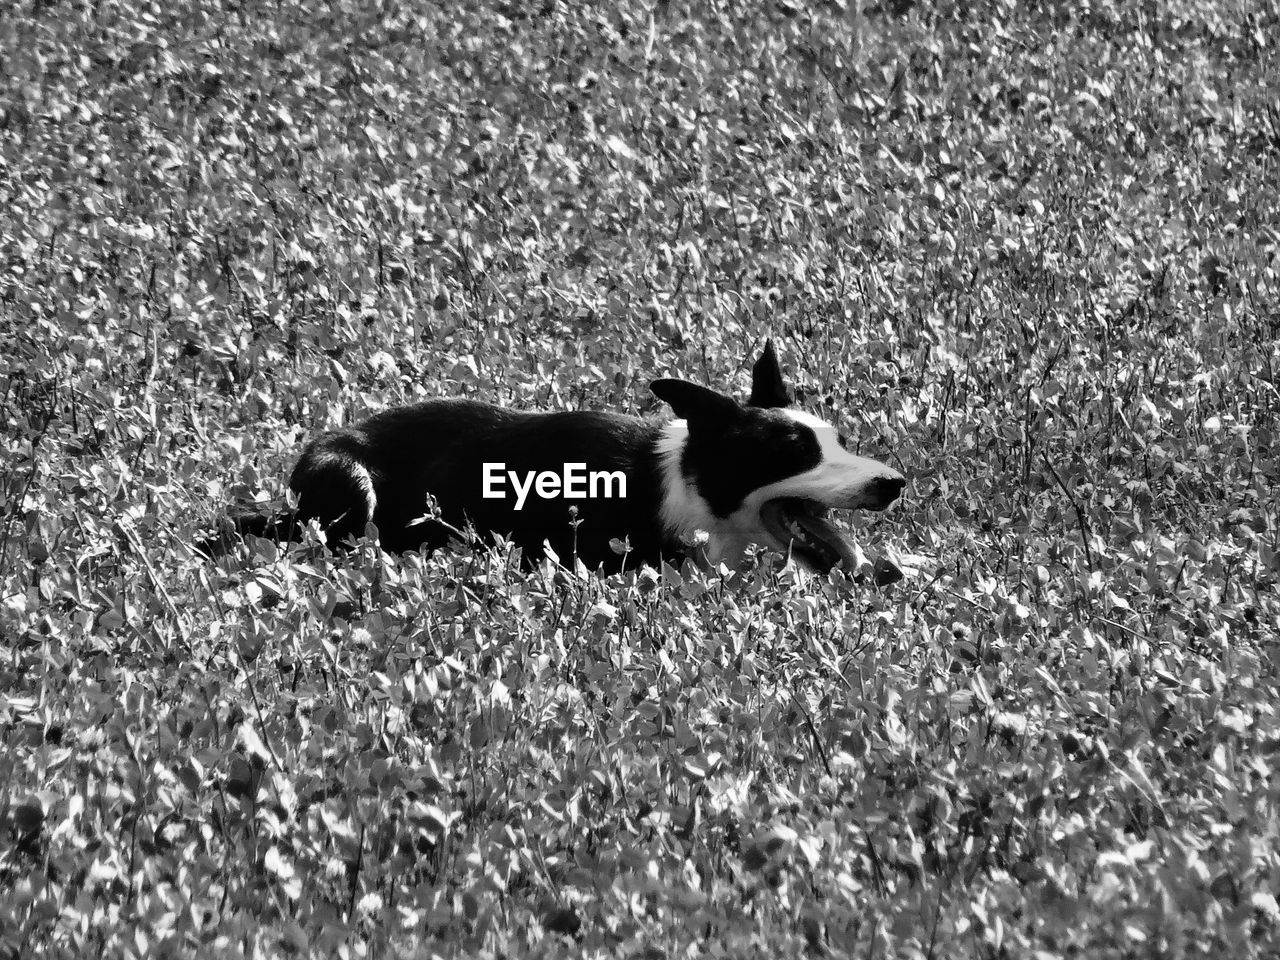 Dog lying on field